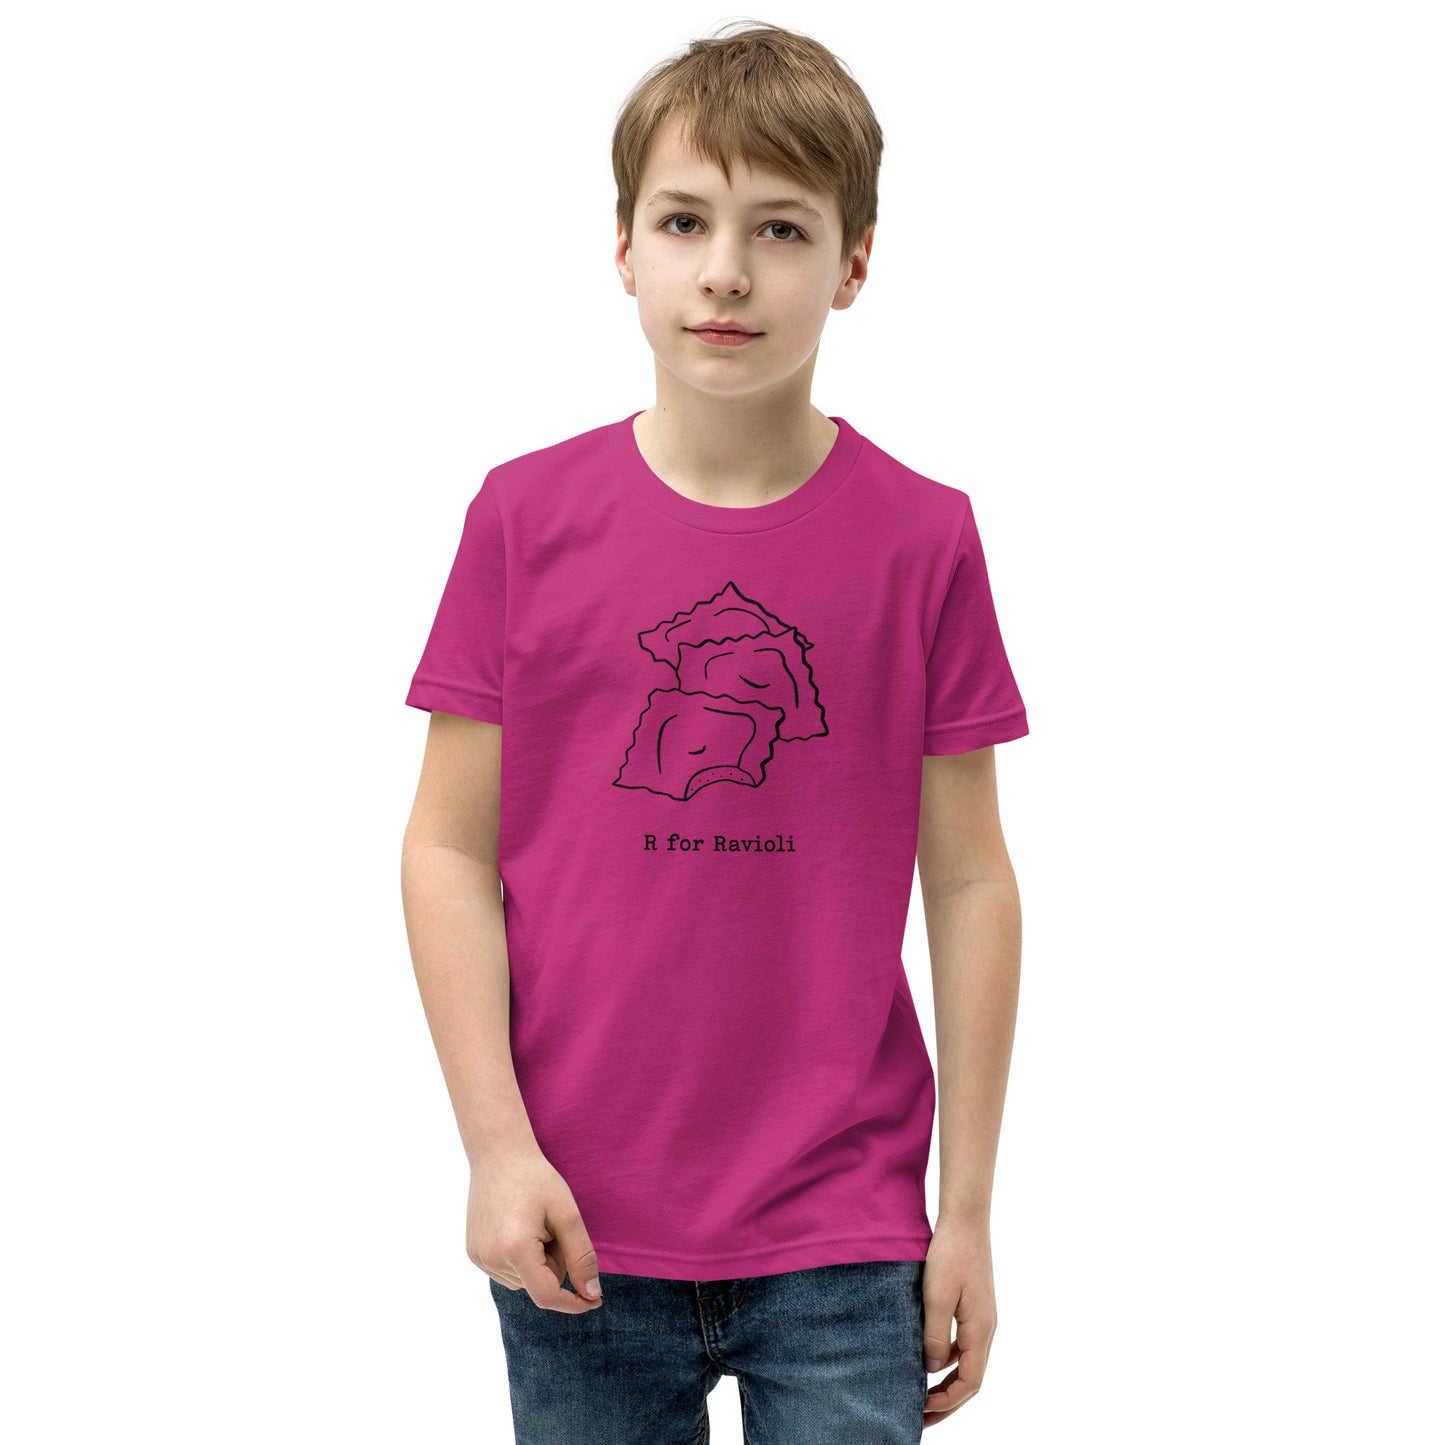 Ravioli on a Youth Short Sleeve T-Shirt